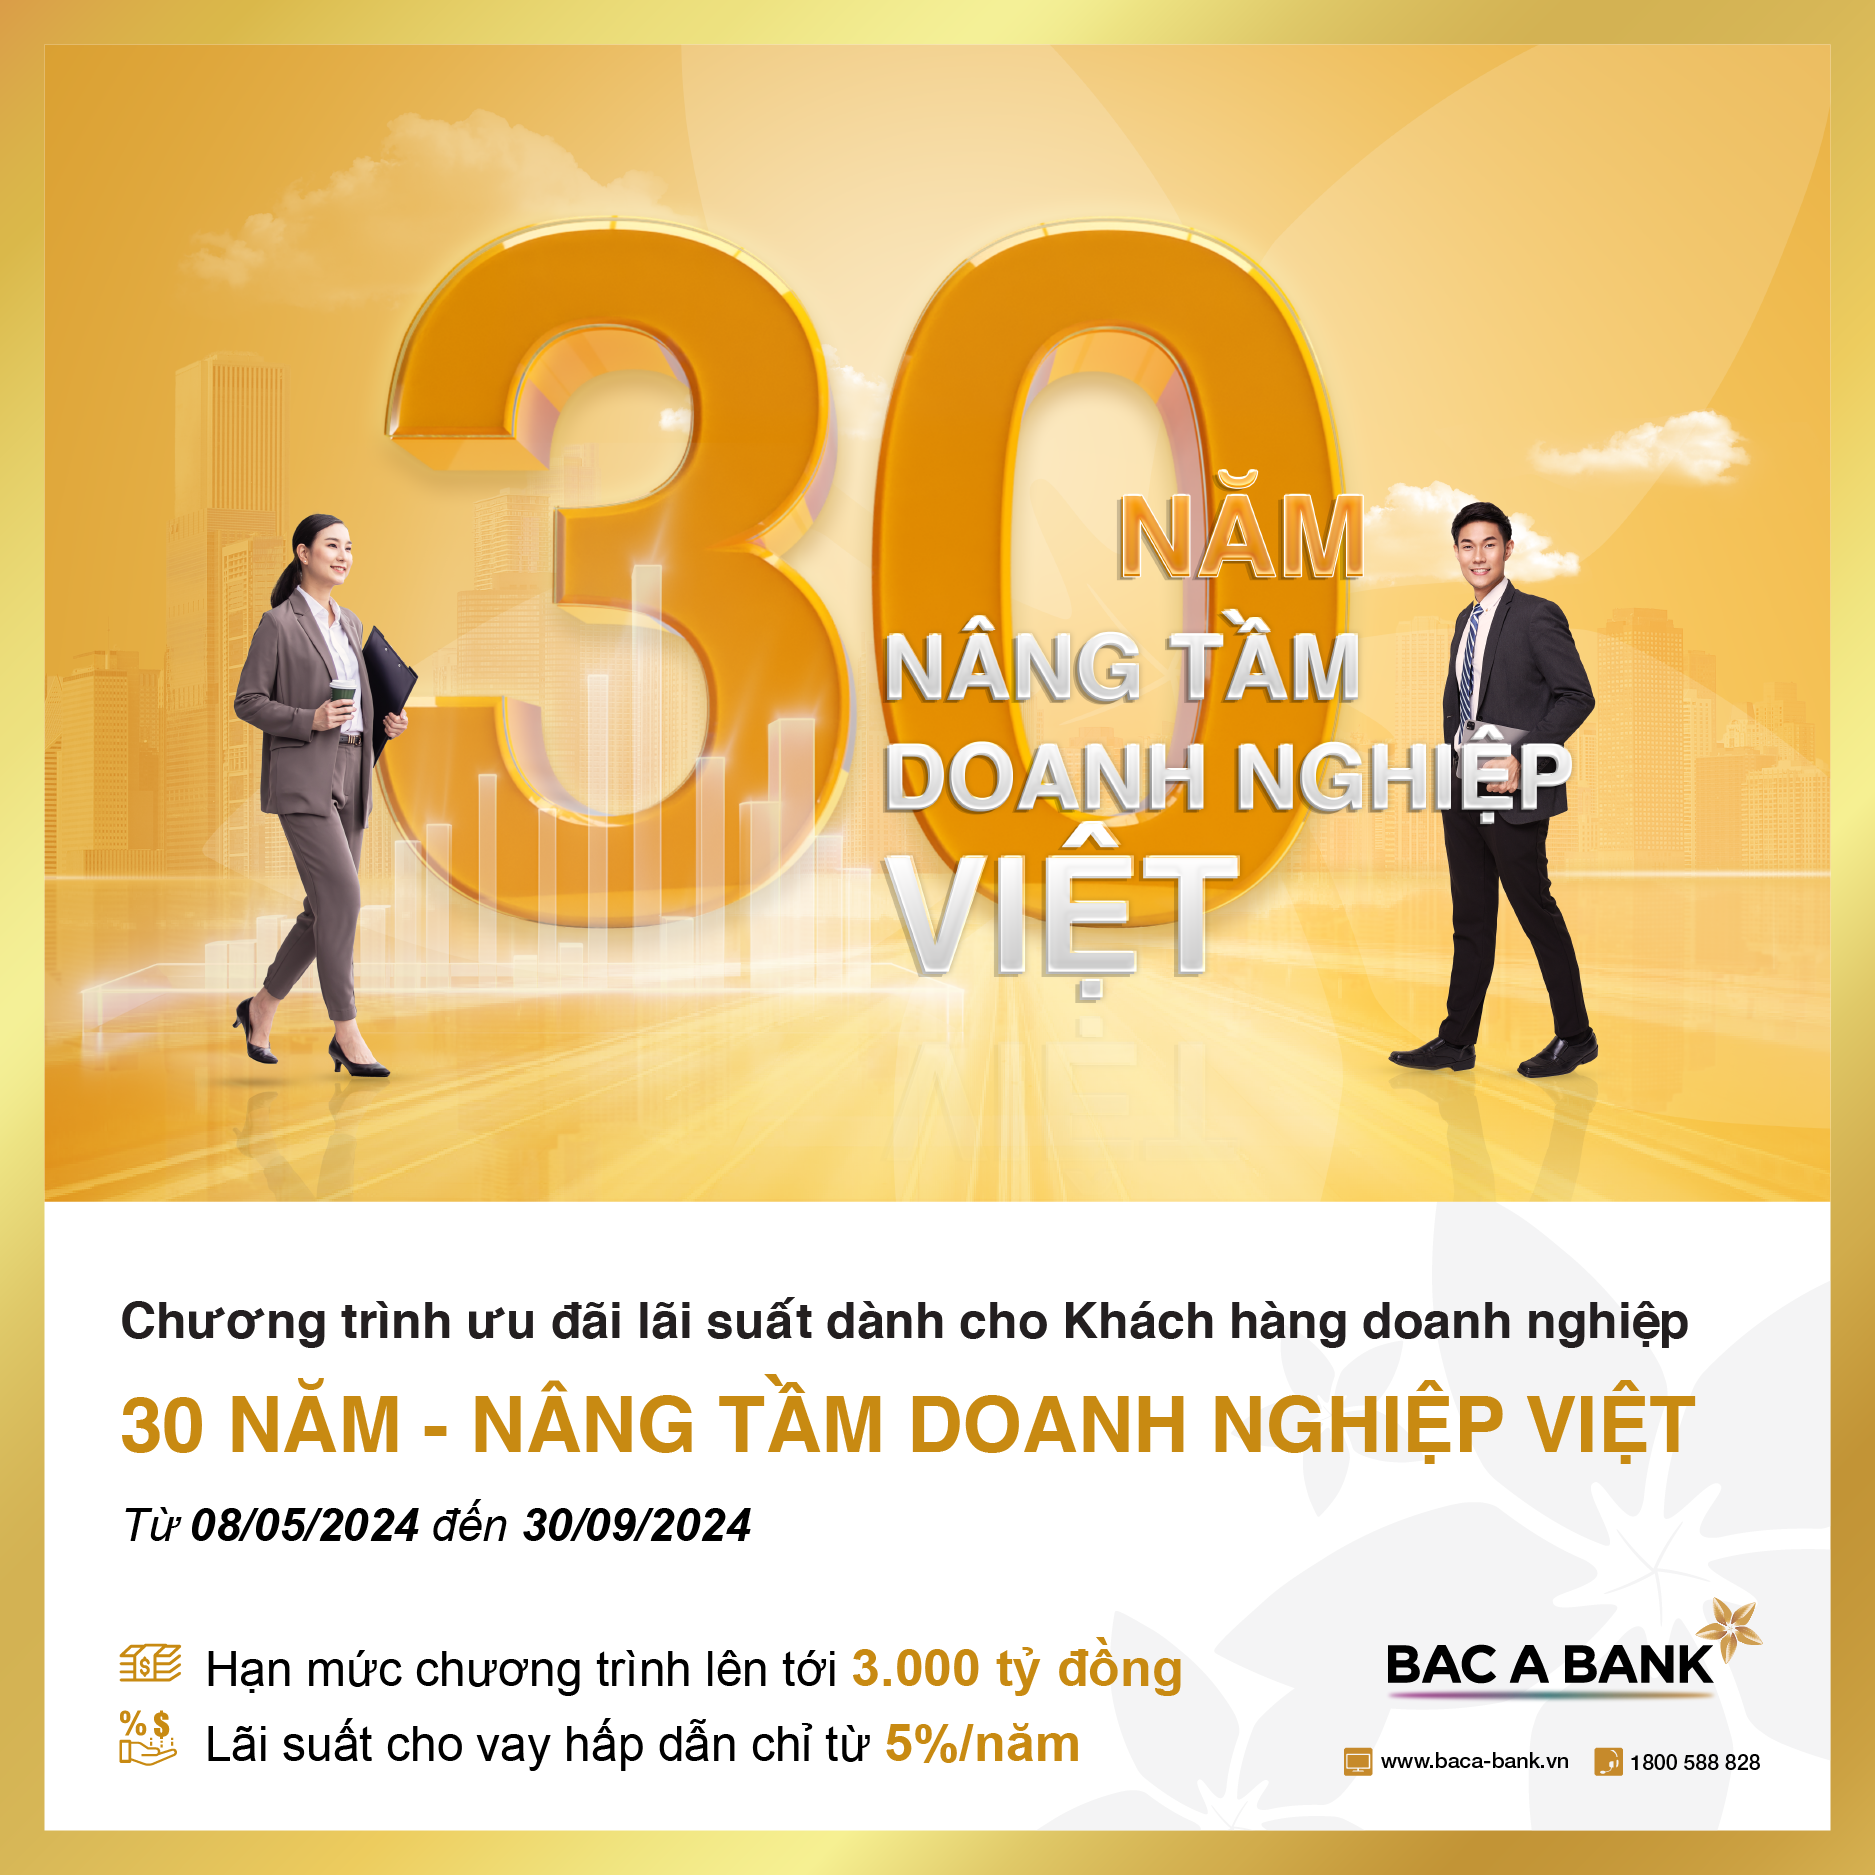 Master_30 nam - Nang tam doanh nghiep Viet-01.png